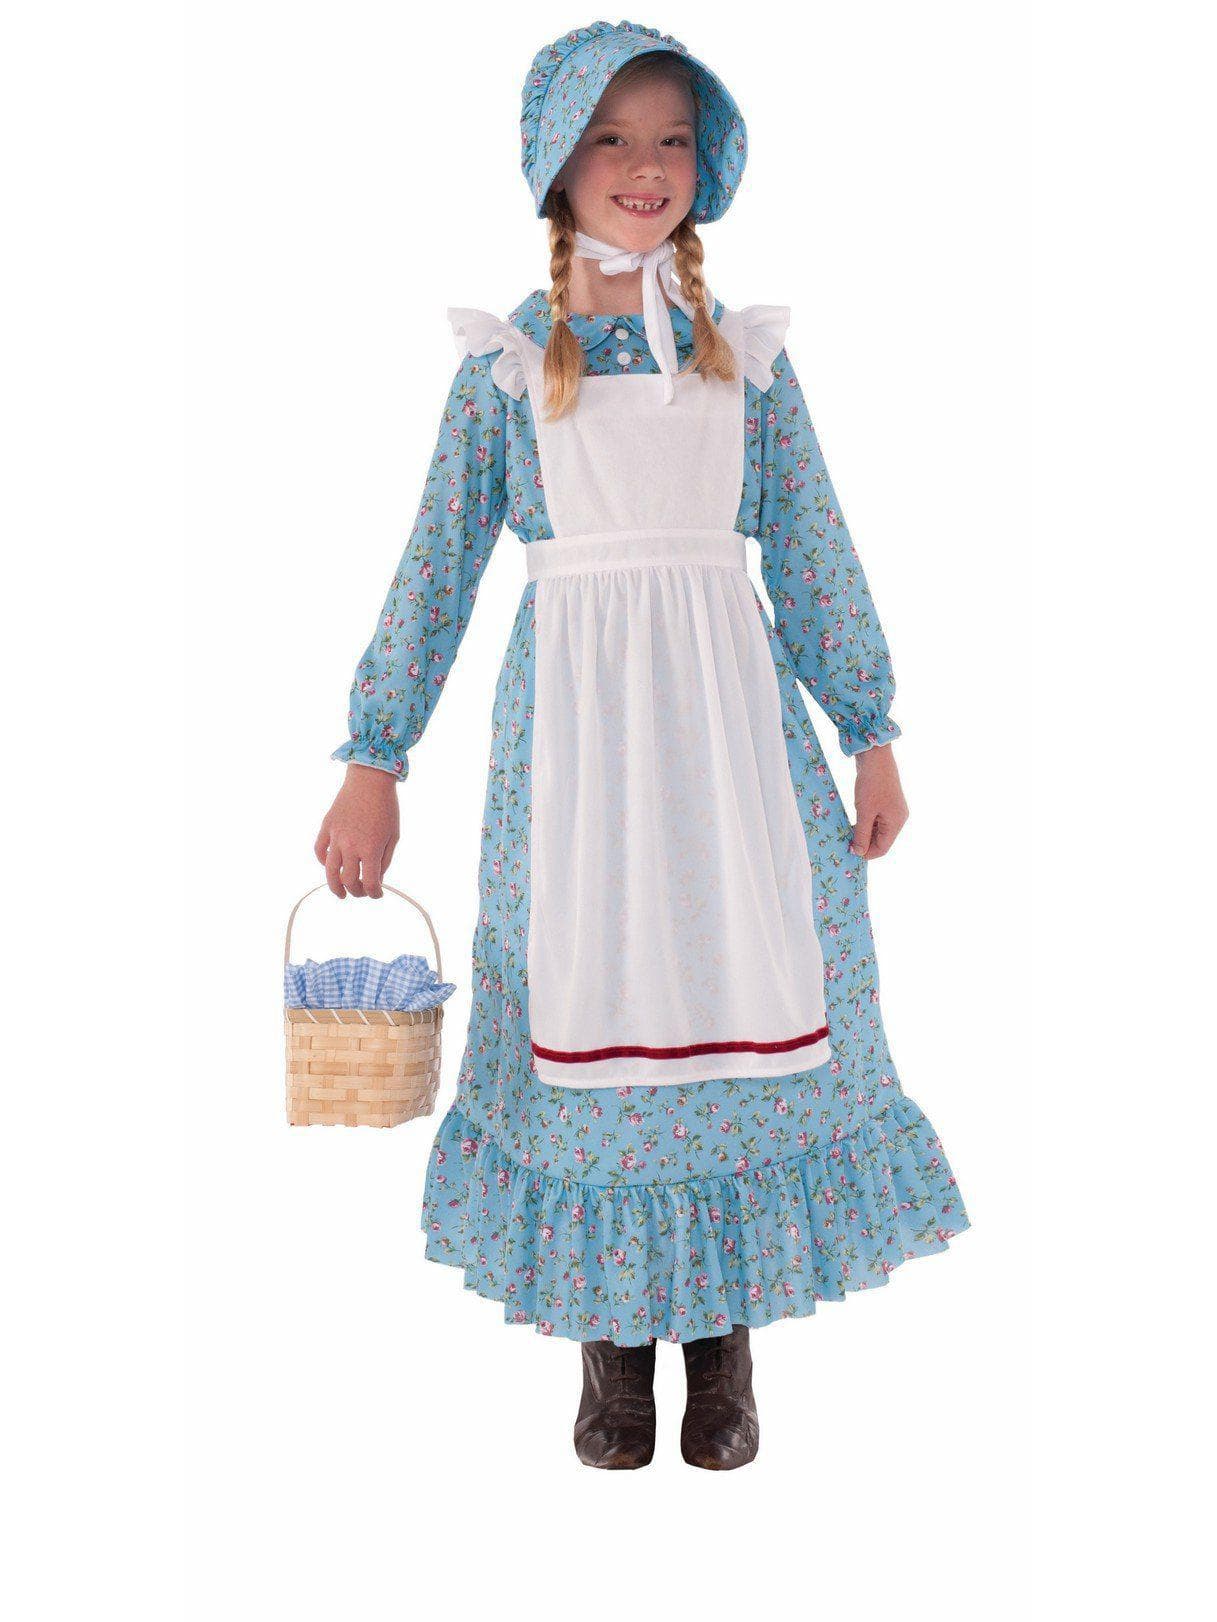 Kid's Pioneer Girl Costume - costumes.com